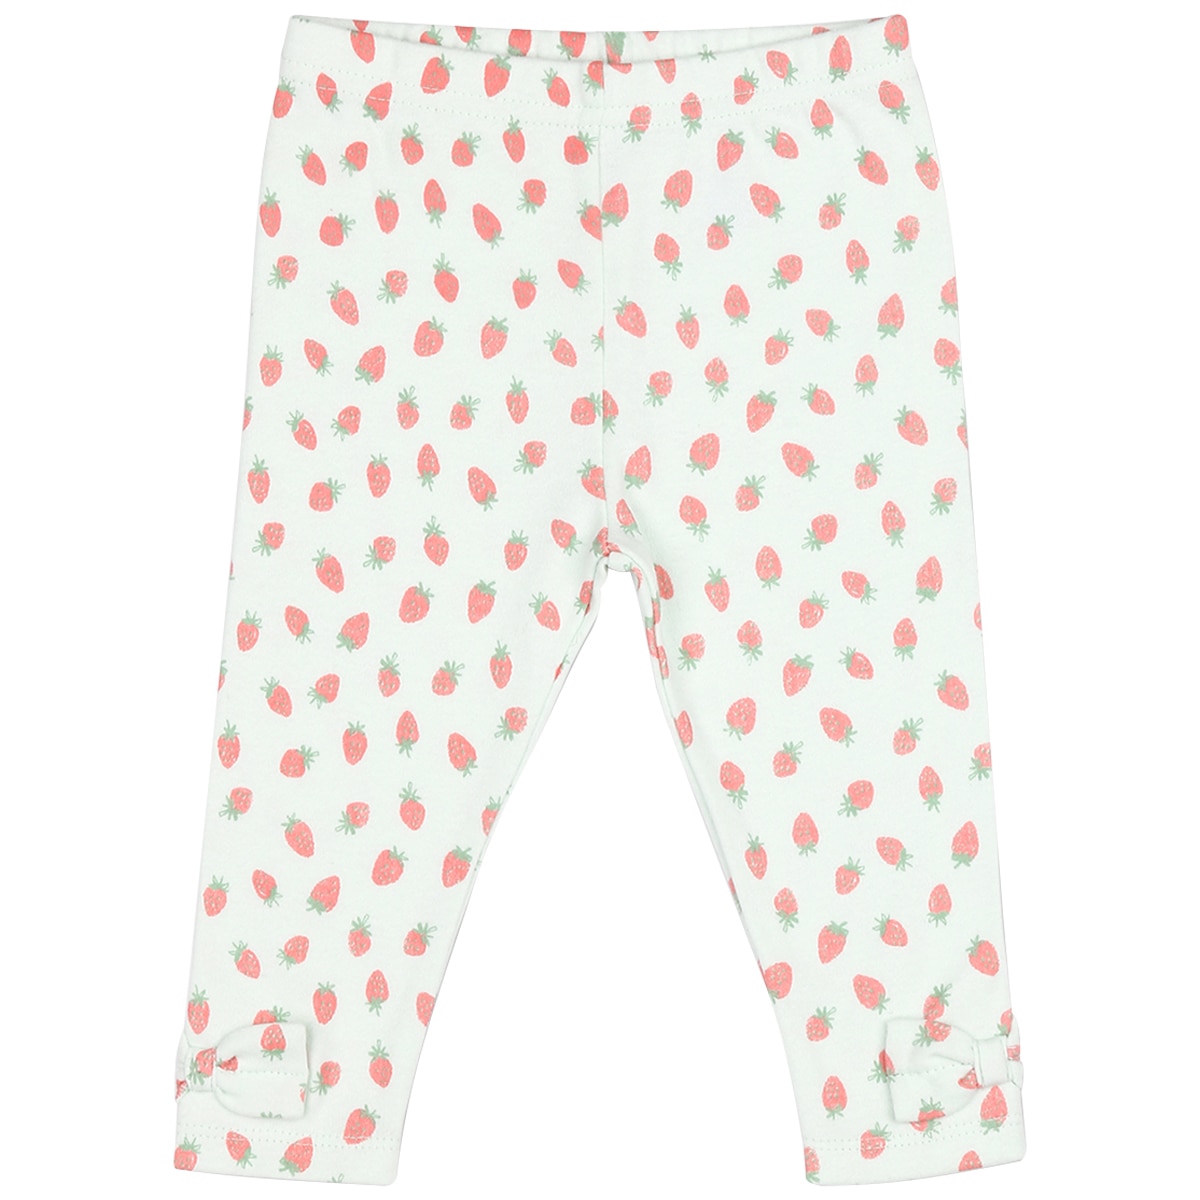 Peanut Shell 2pc Baby Set - Pink Top/Print Pants